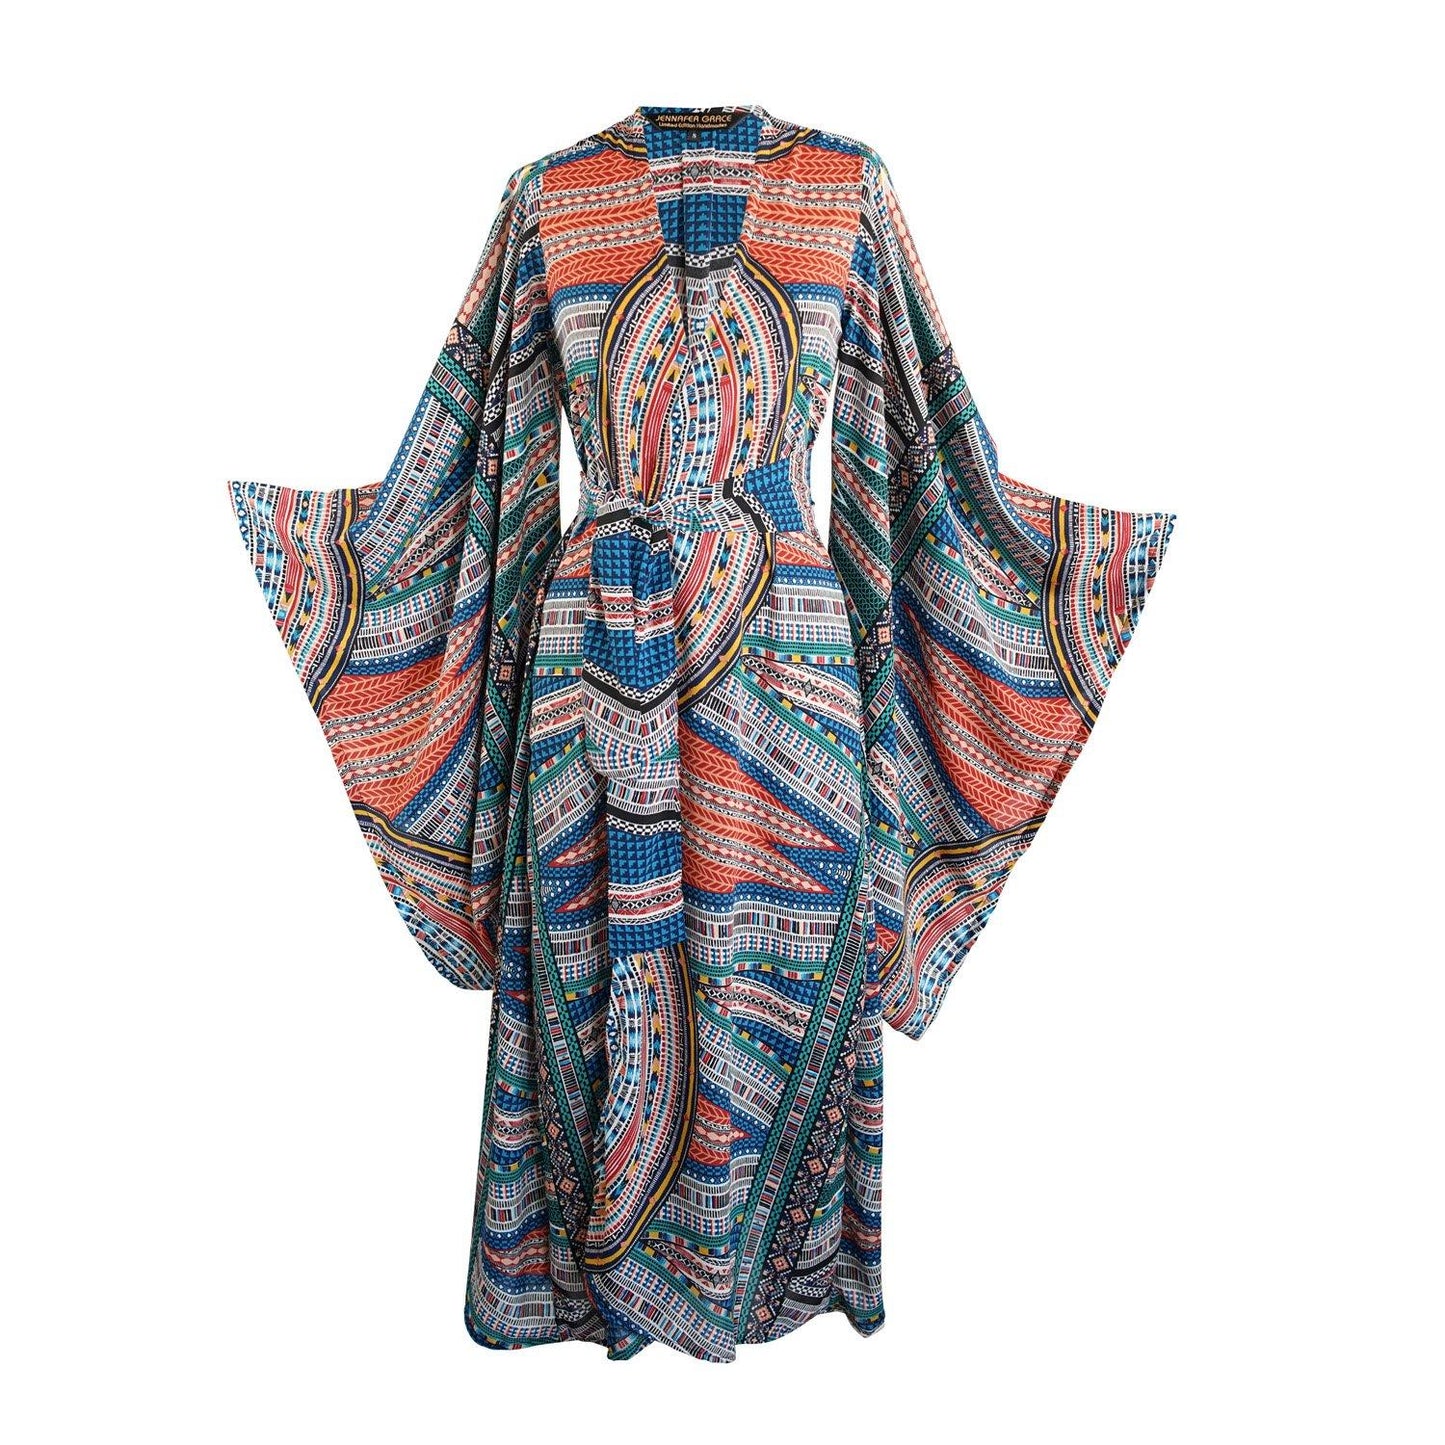 jennafer grace Zulu kimono duster wrap dress coverup beach resort holiday lounge spa bohemian boho hippie vibrant colorful handmade